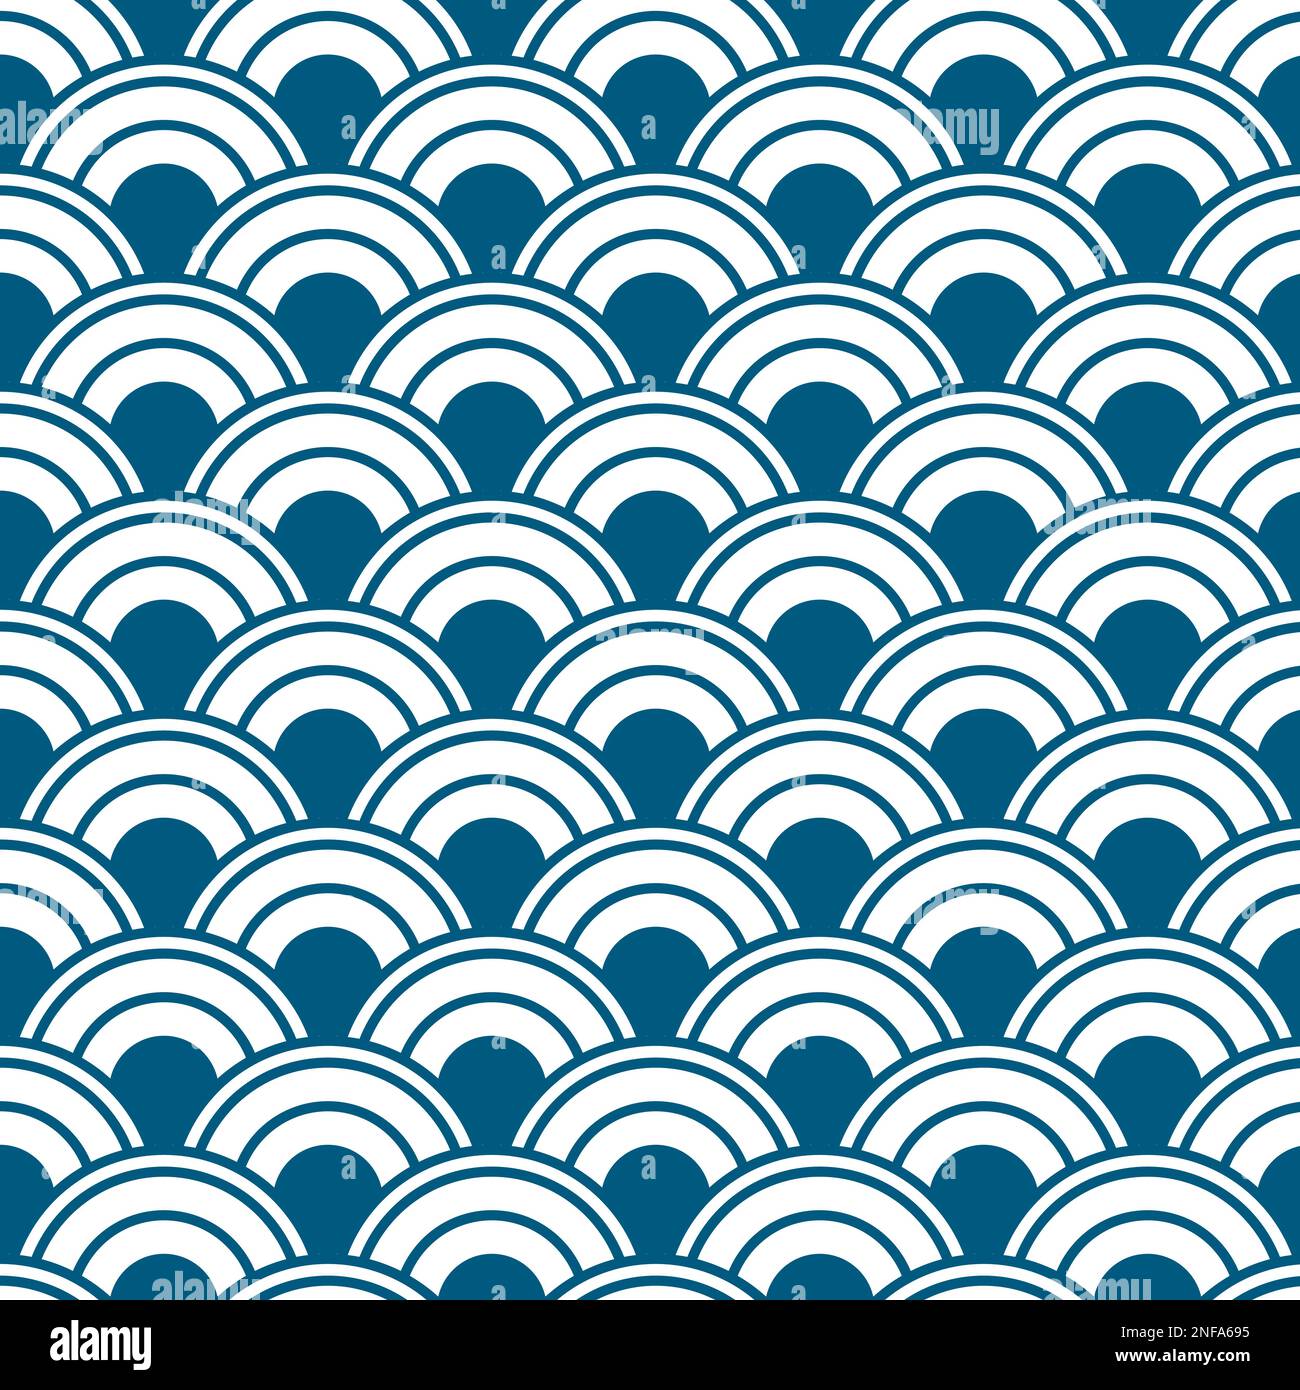 Flat Japenese wave style pattern background Stock Vector Image & Art ...